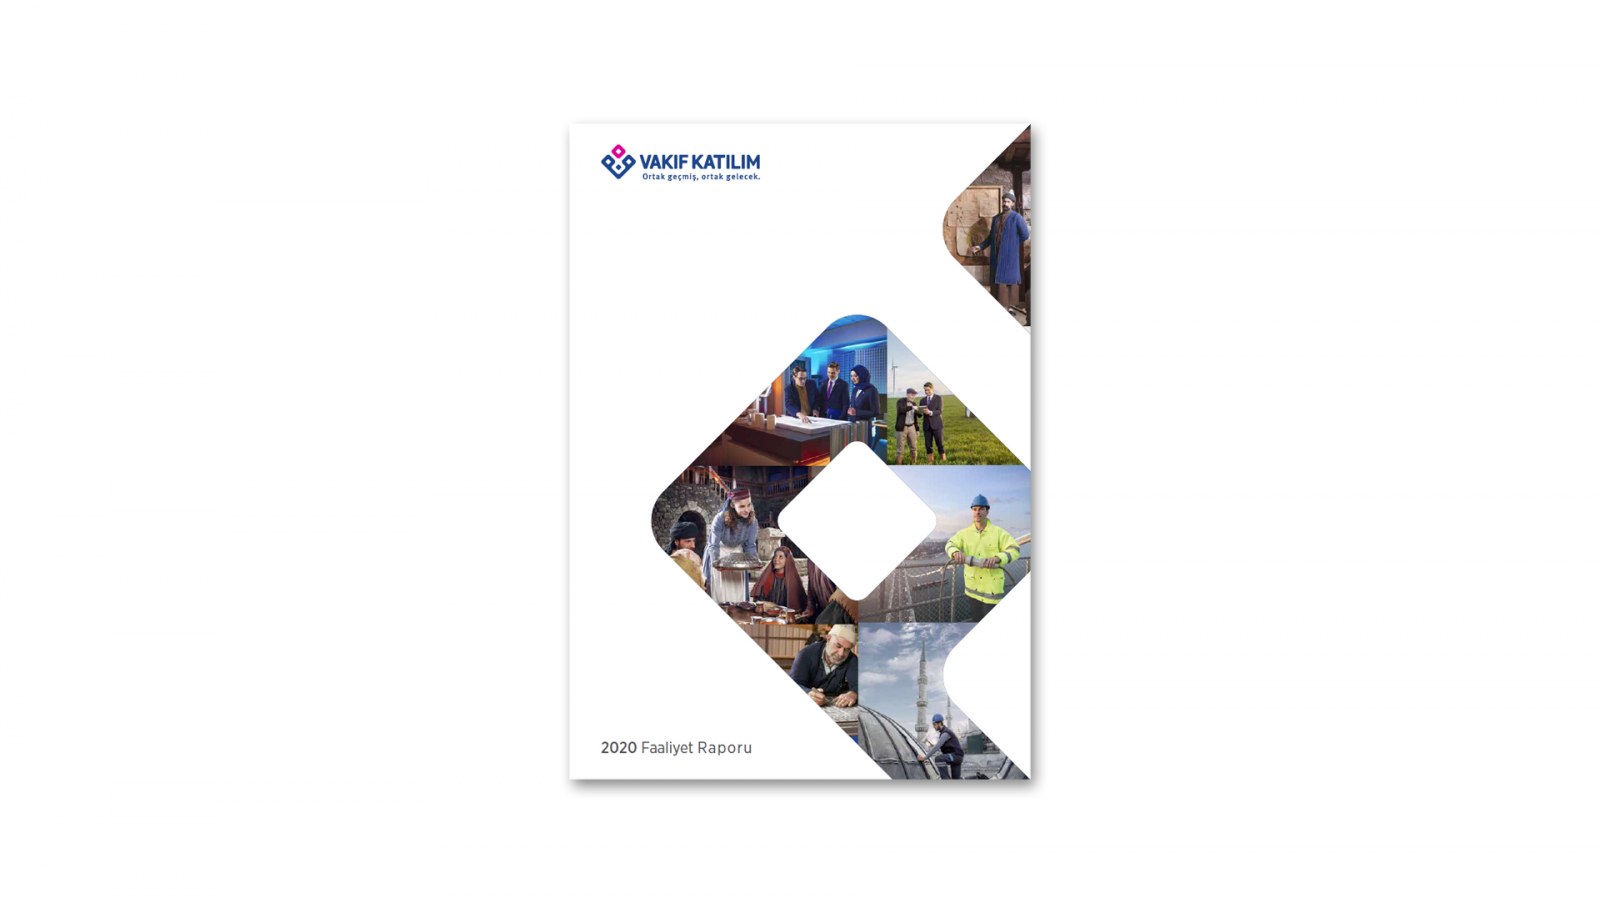 VAKIF KATILIM / 2020 Faaliyet Raporu / 2020 Annual Report